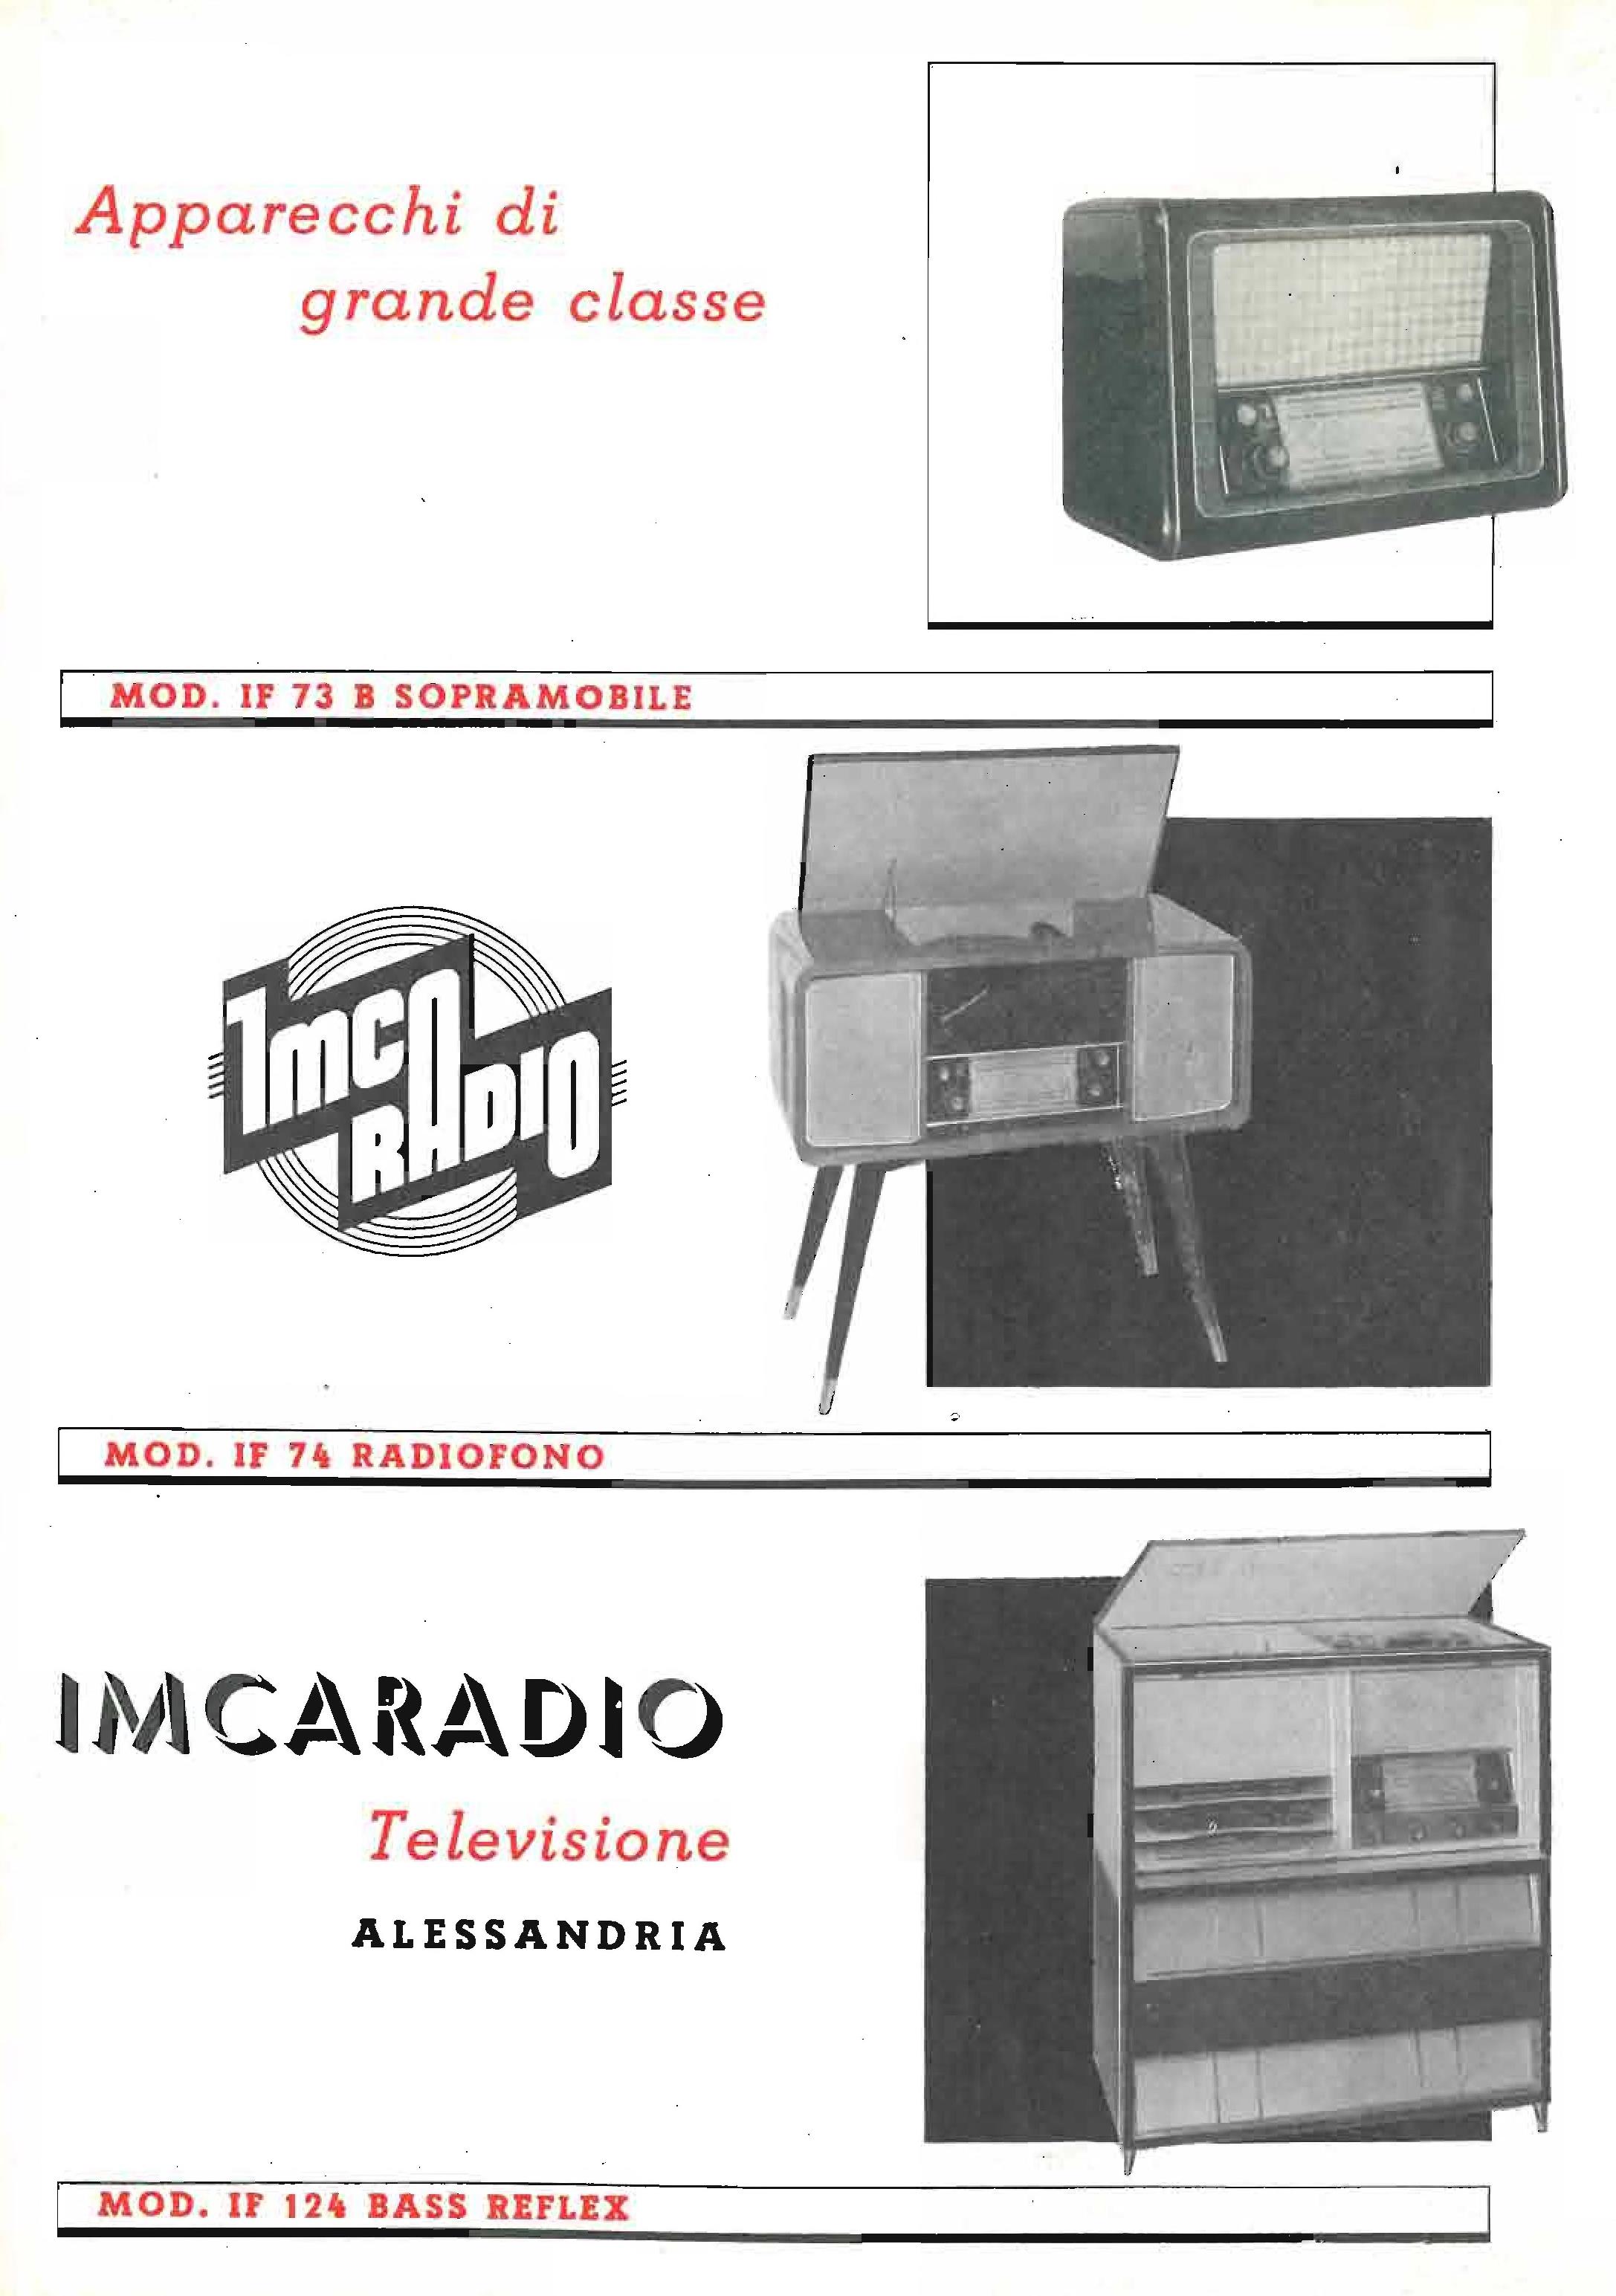 Imcaradio 1957 0.jpg